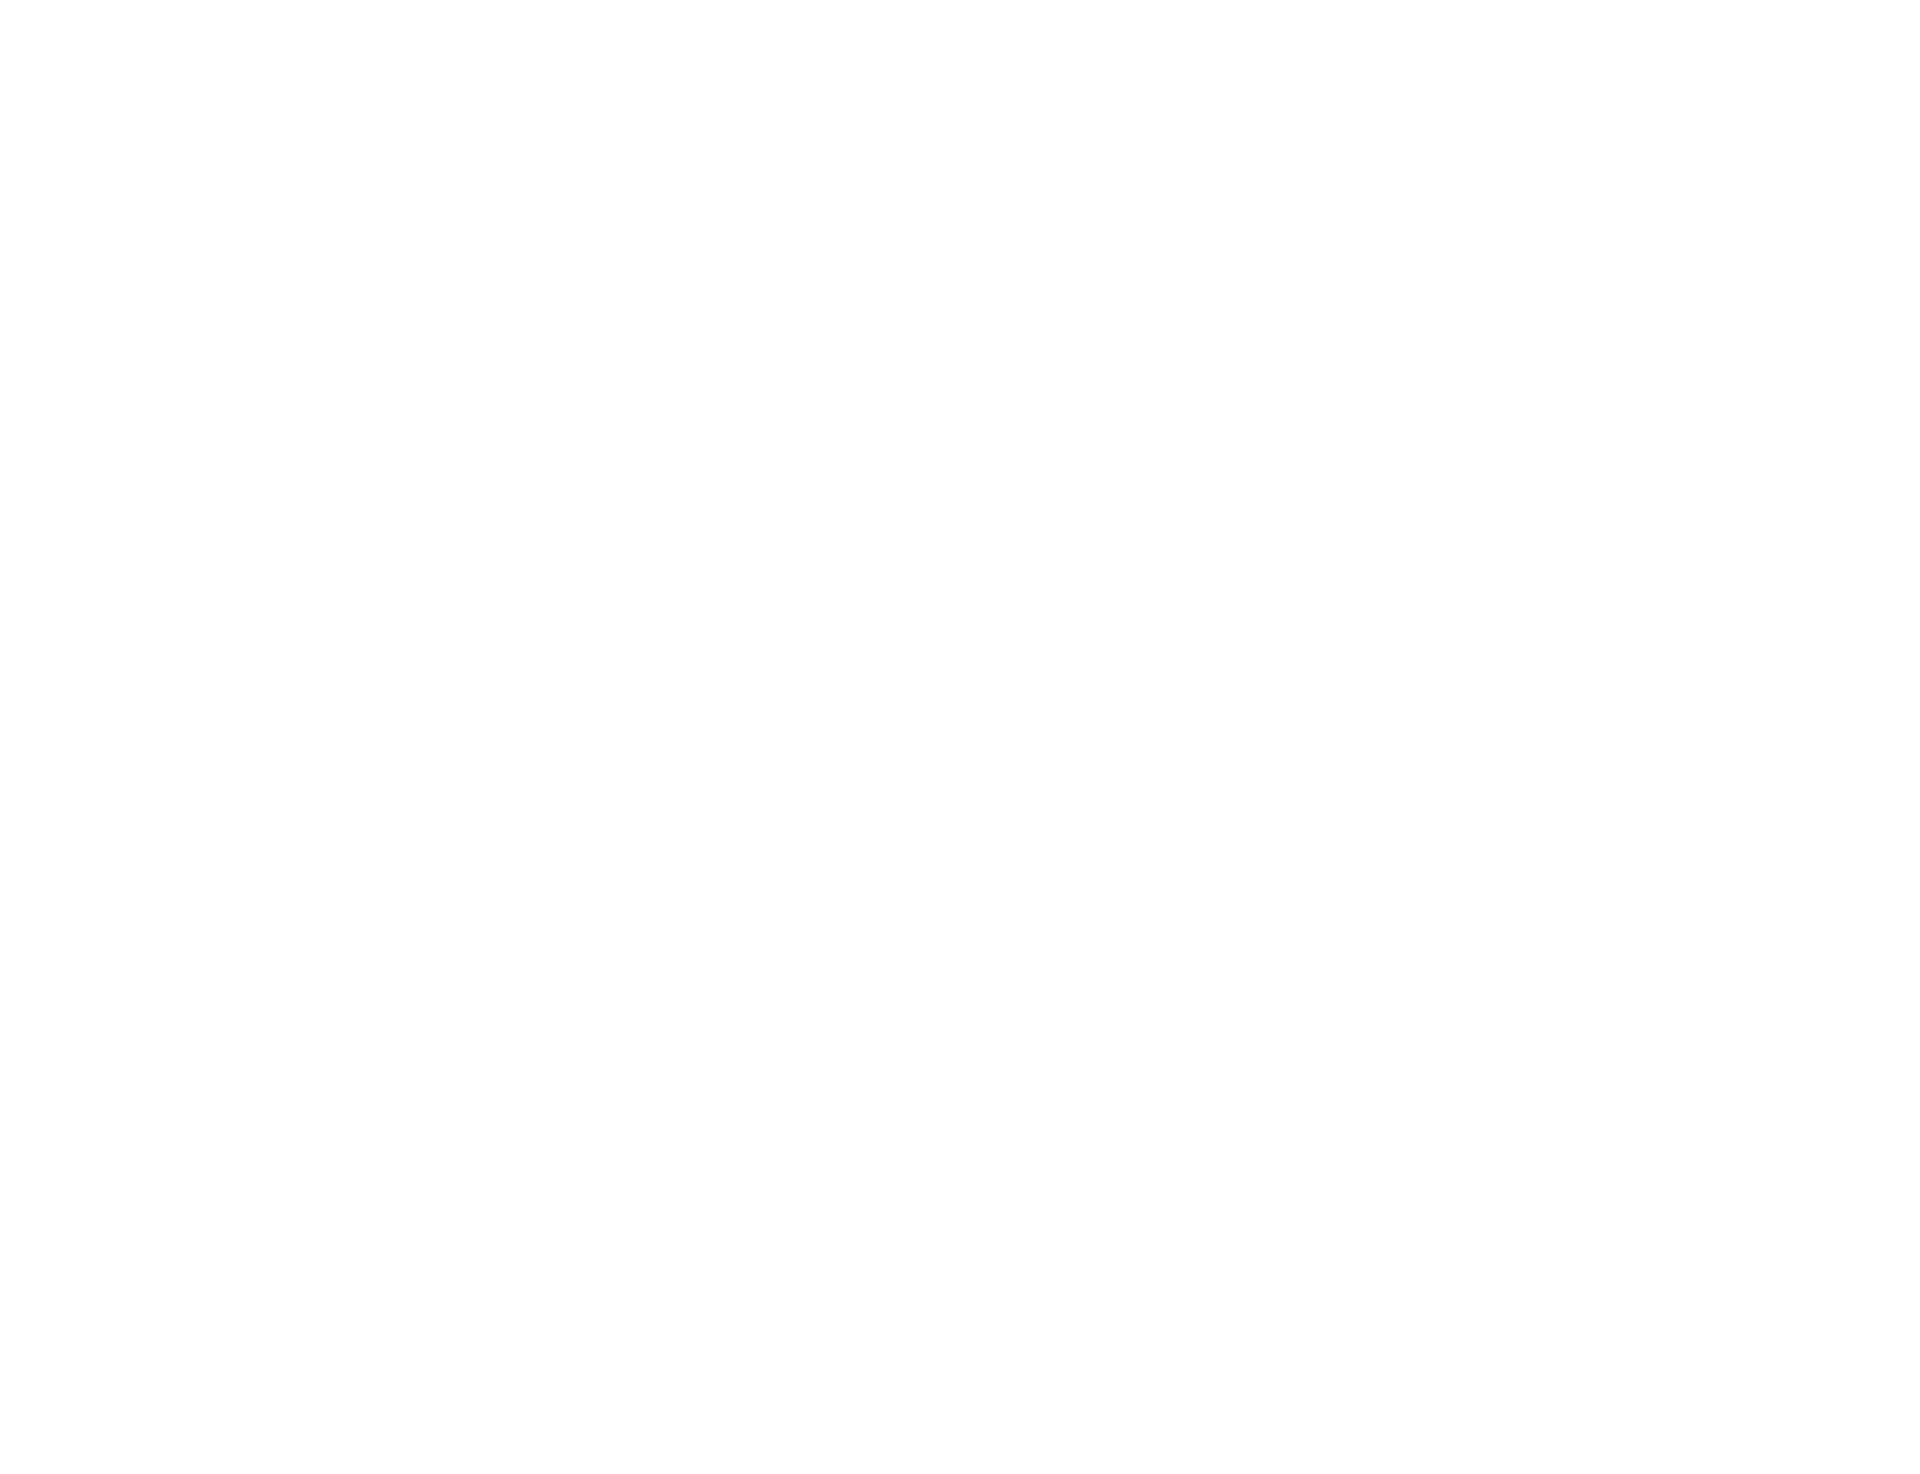 Bowerman Funeral Home Logo